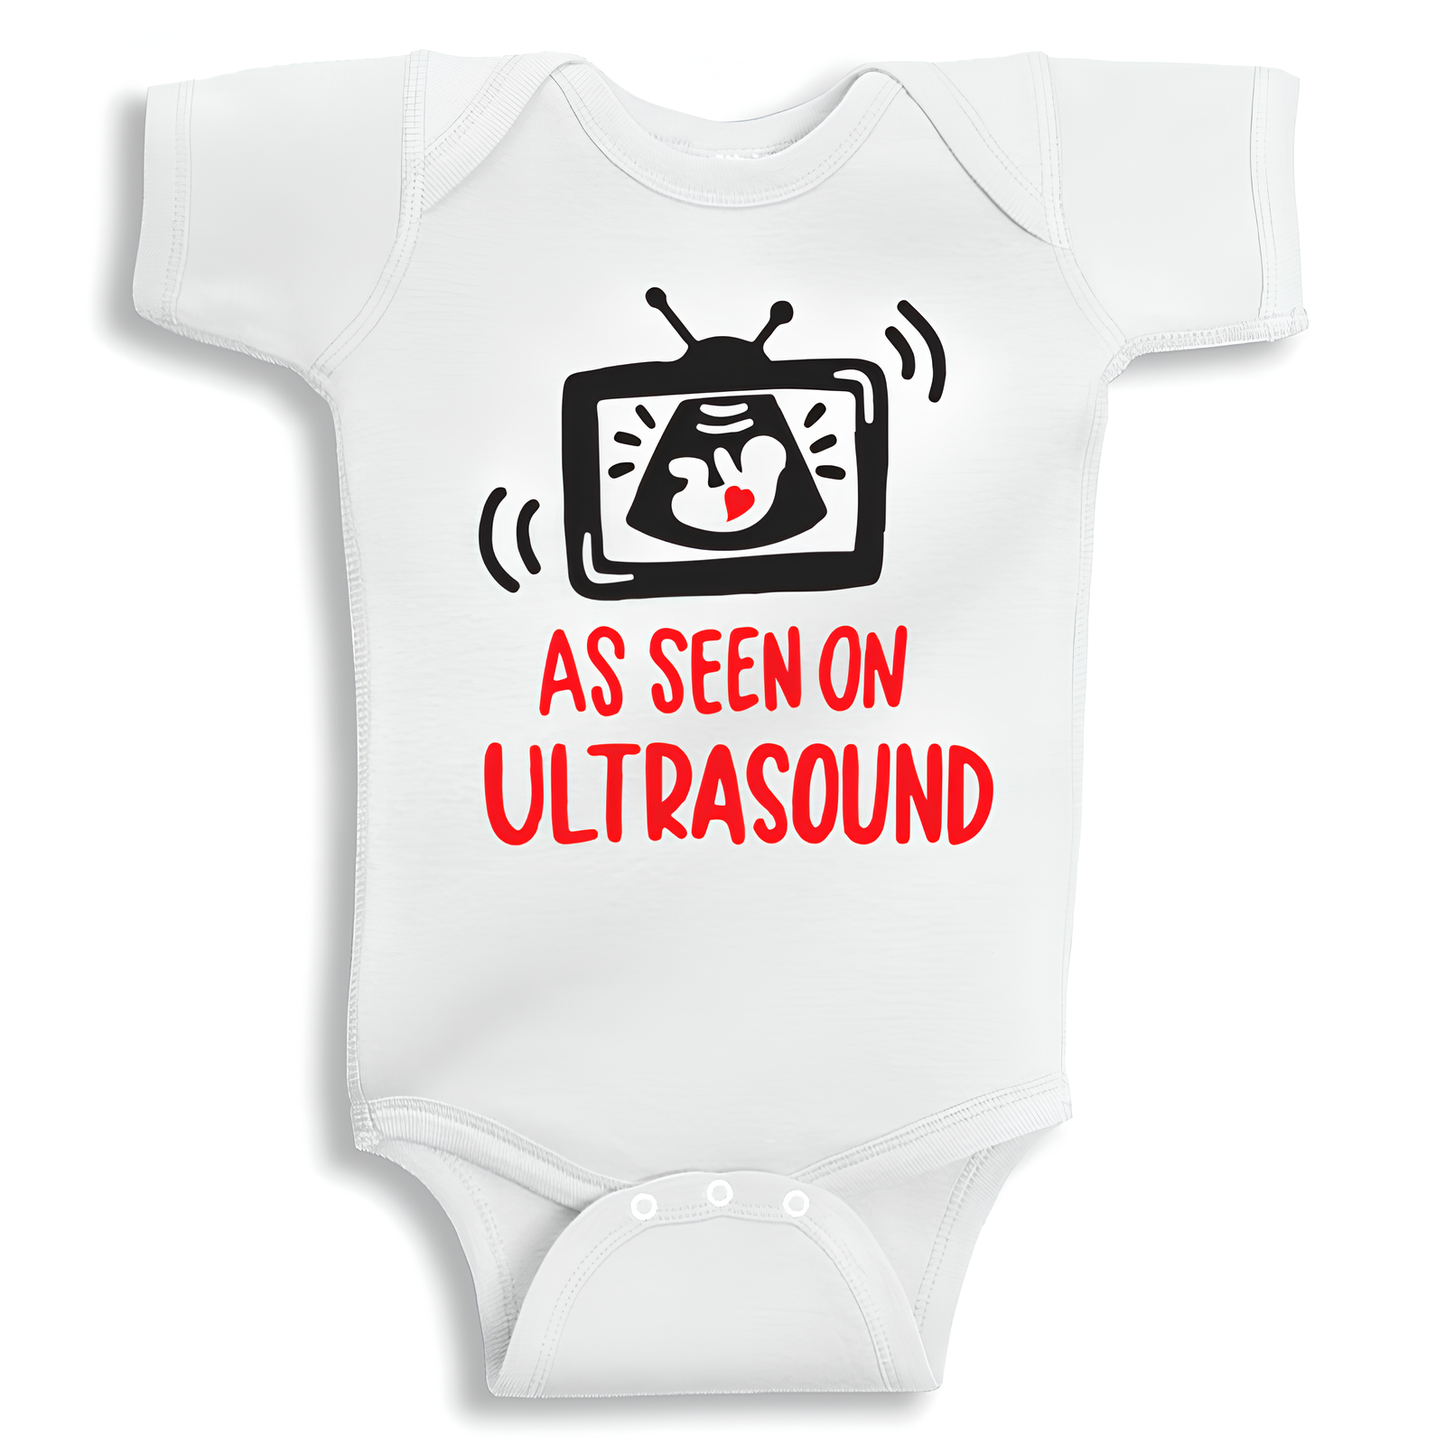 As seen on ultrasound Baby Onesie